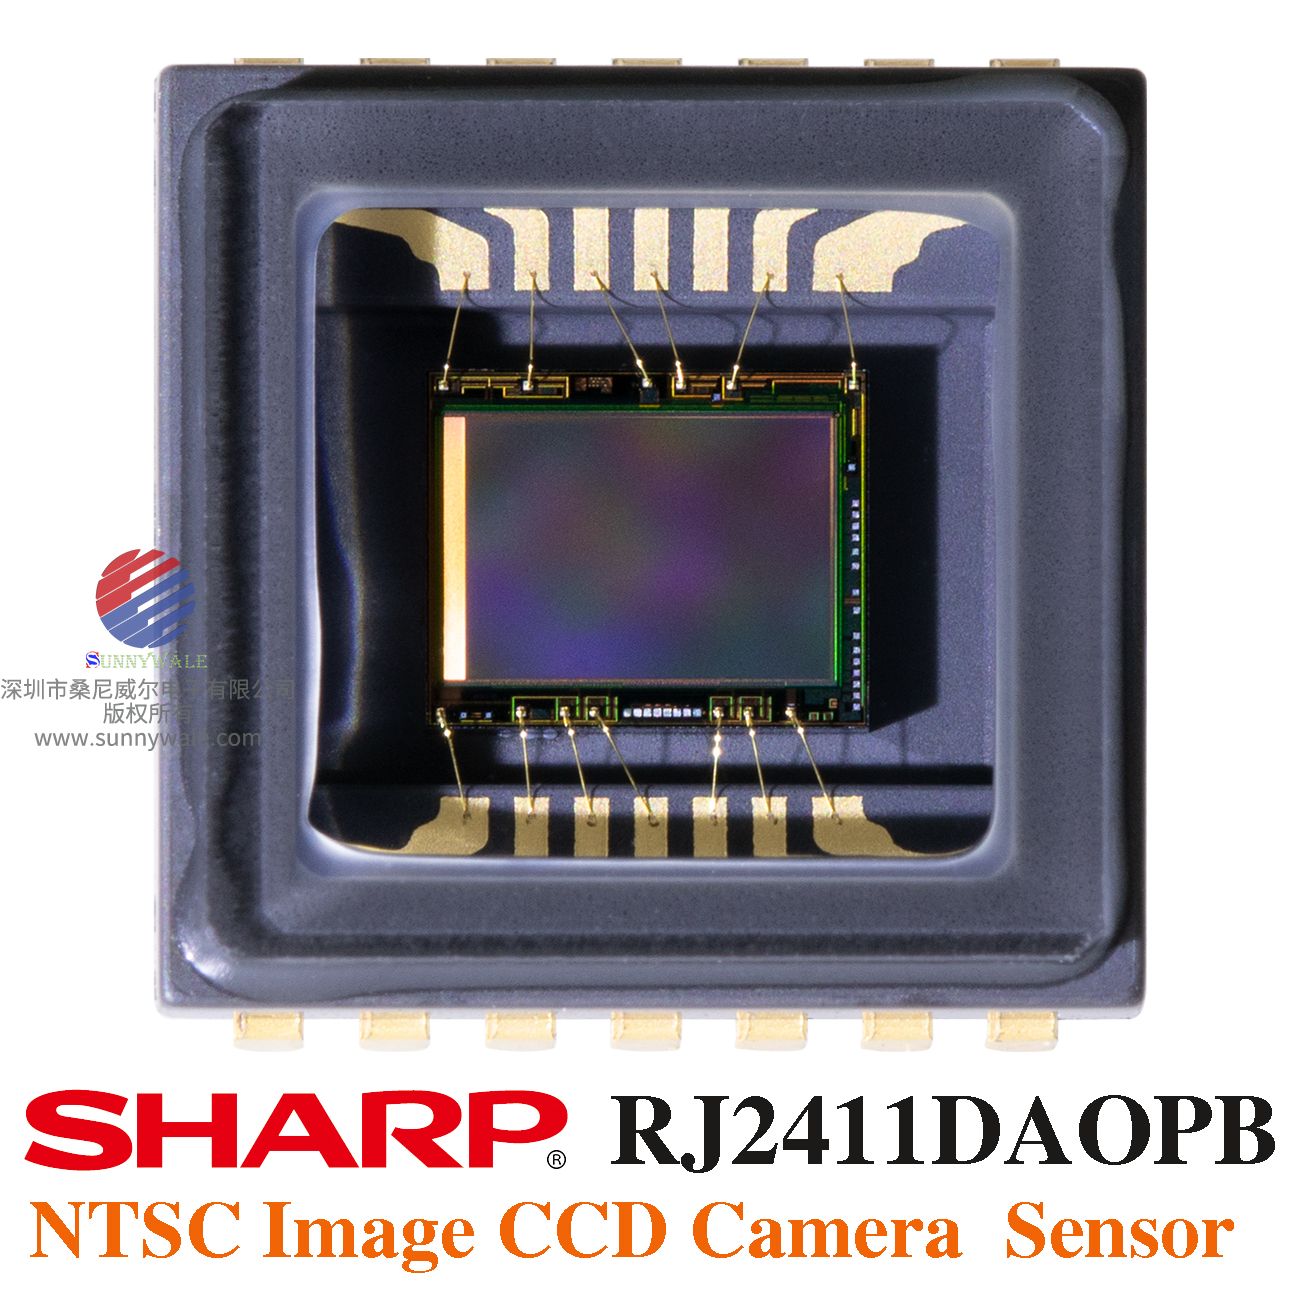 RJ2411DA0PB，RJ2411DAOPB， 夏普SHARP， 1/4英寸彩色CCD，模拟安防攝像机CCD，图像传感器